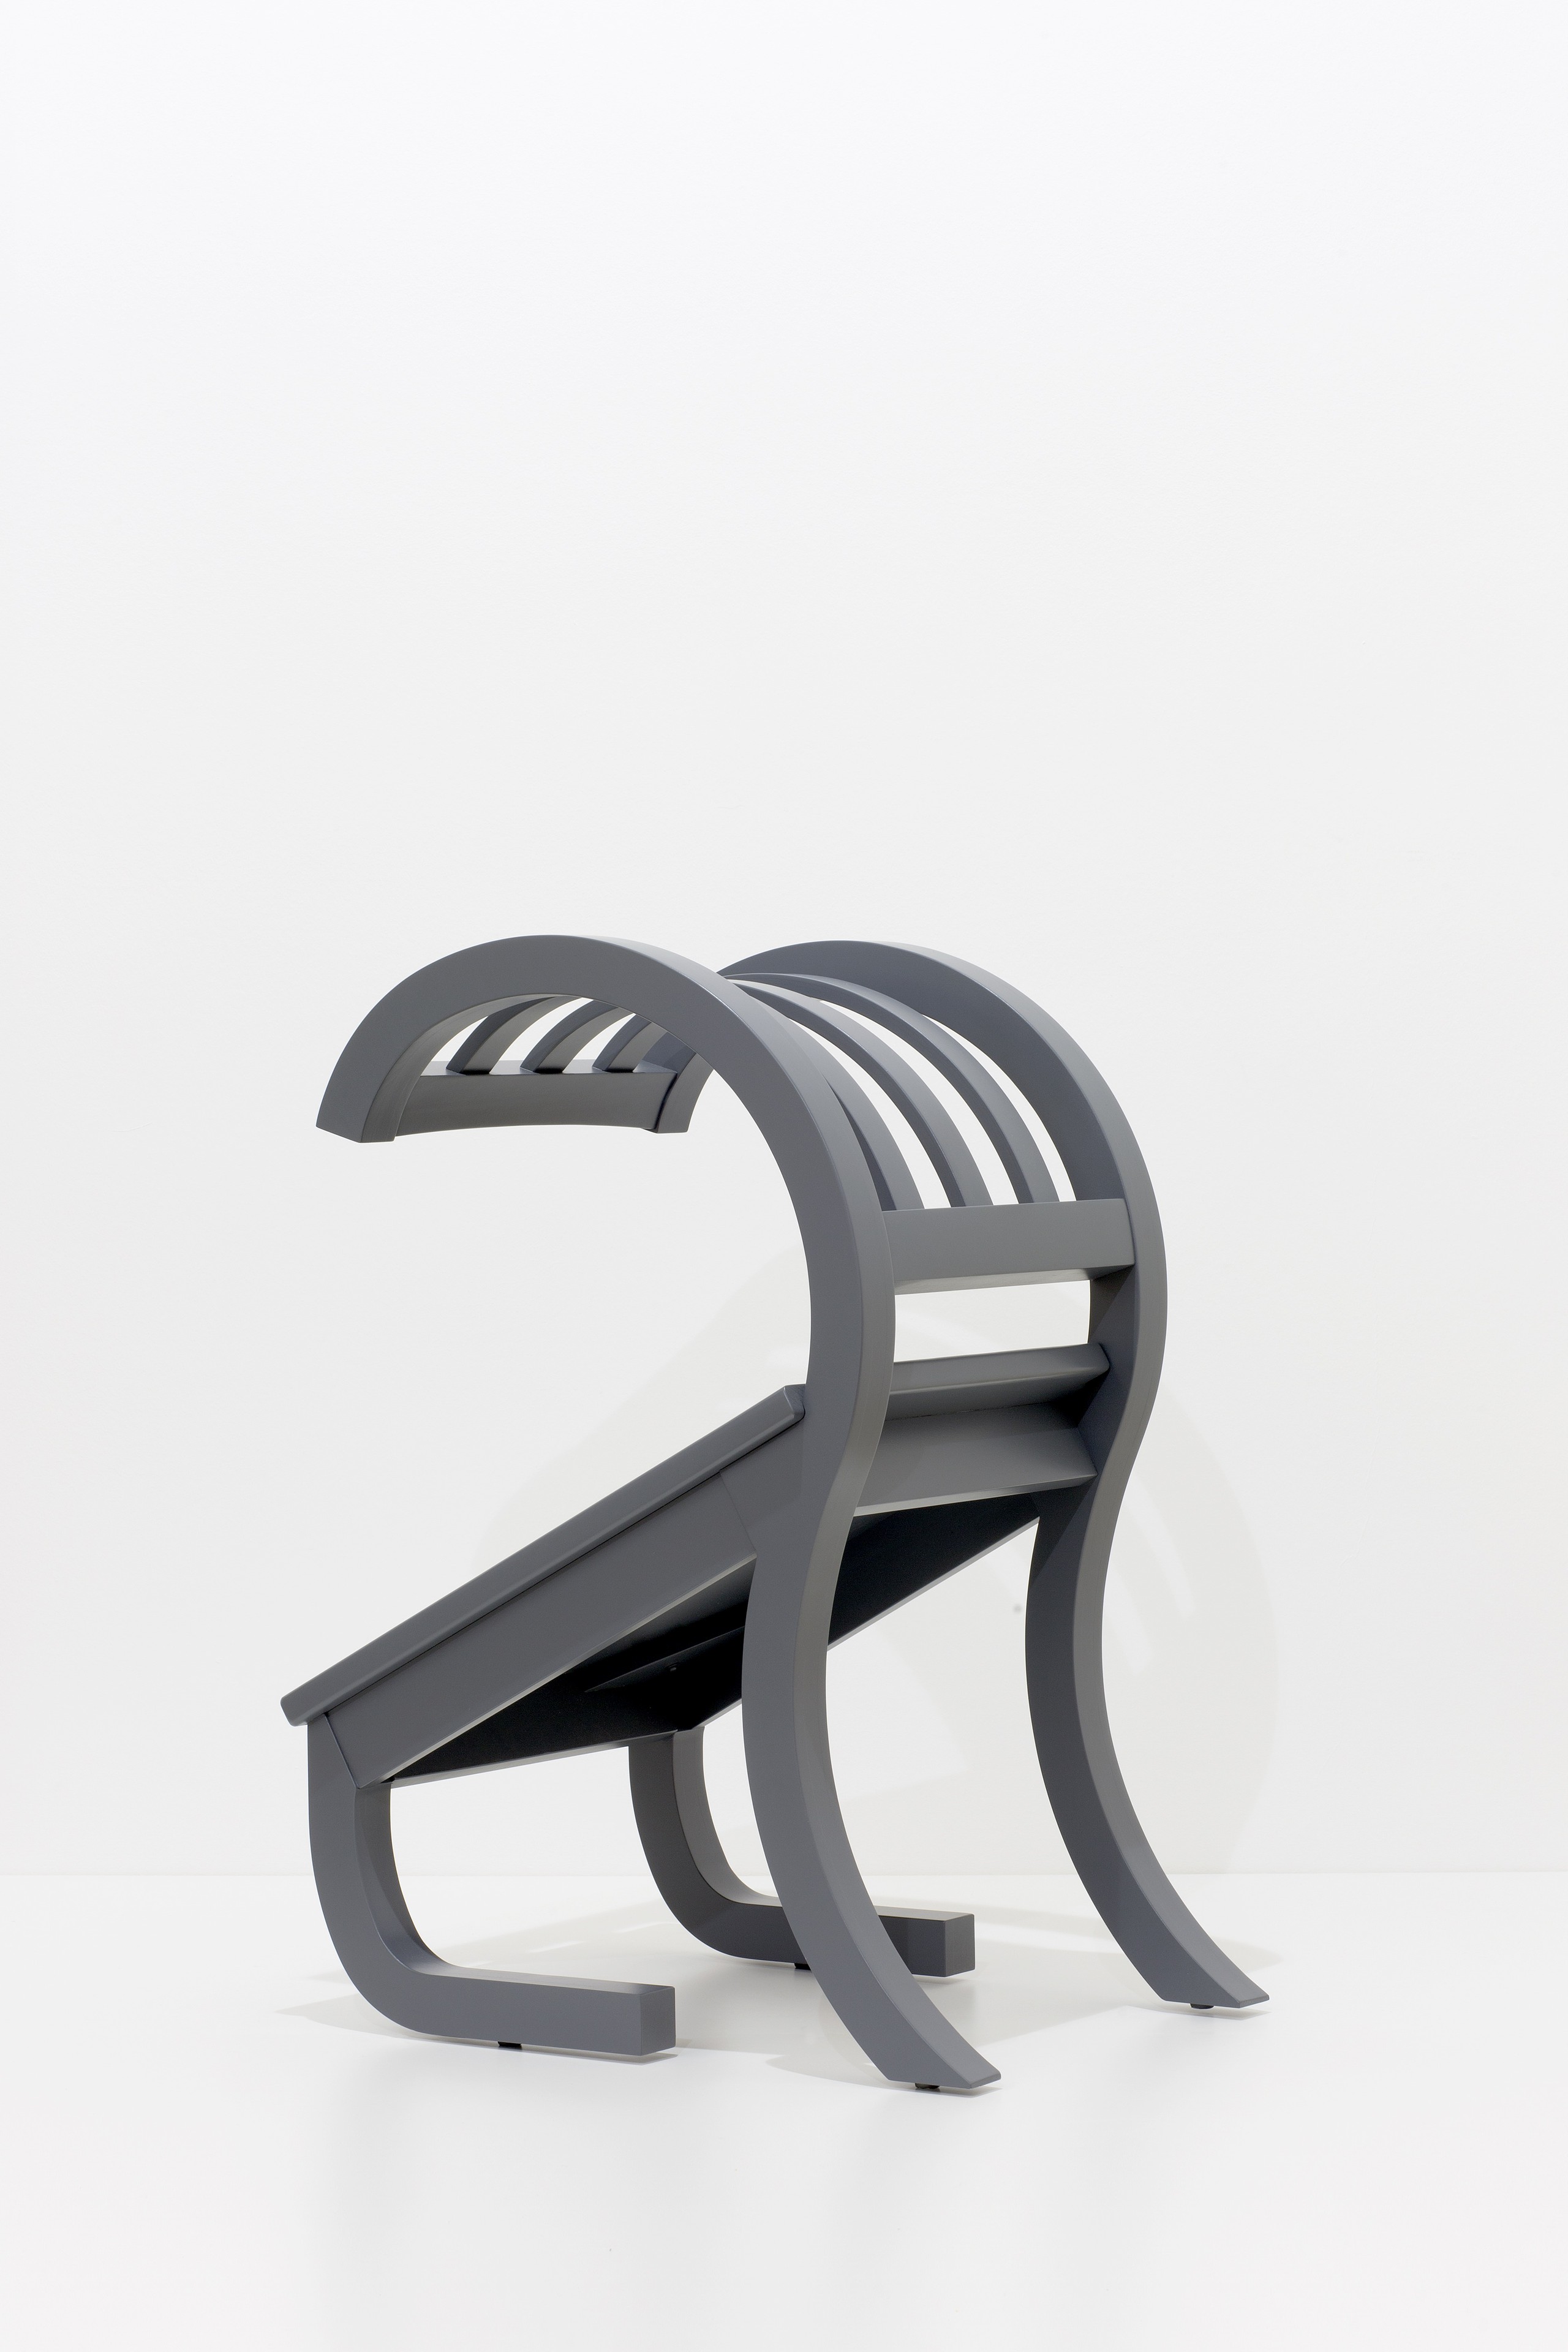 Bunny Rogers, Sad Chair II, 2015, Wood, grey paint, 92 x 48 x 58 cm / 36 1/4 x 19 x 22 3/4 in